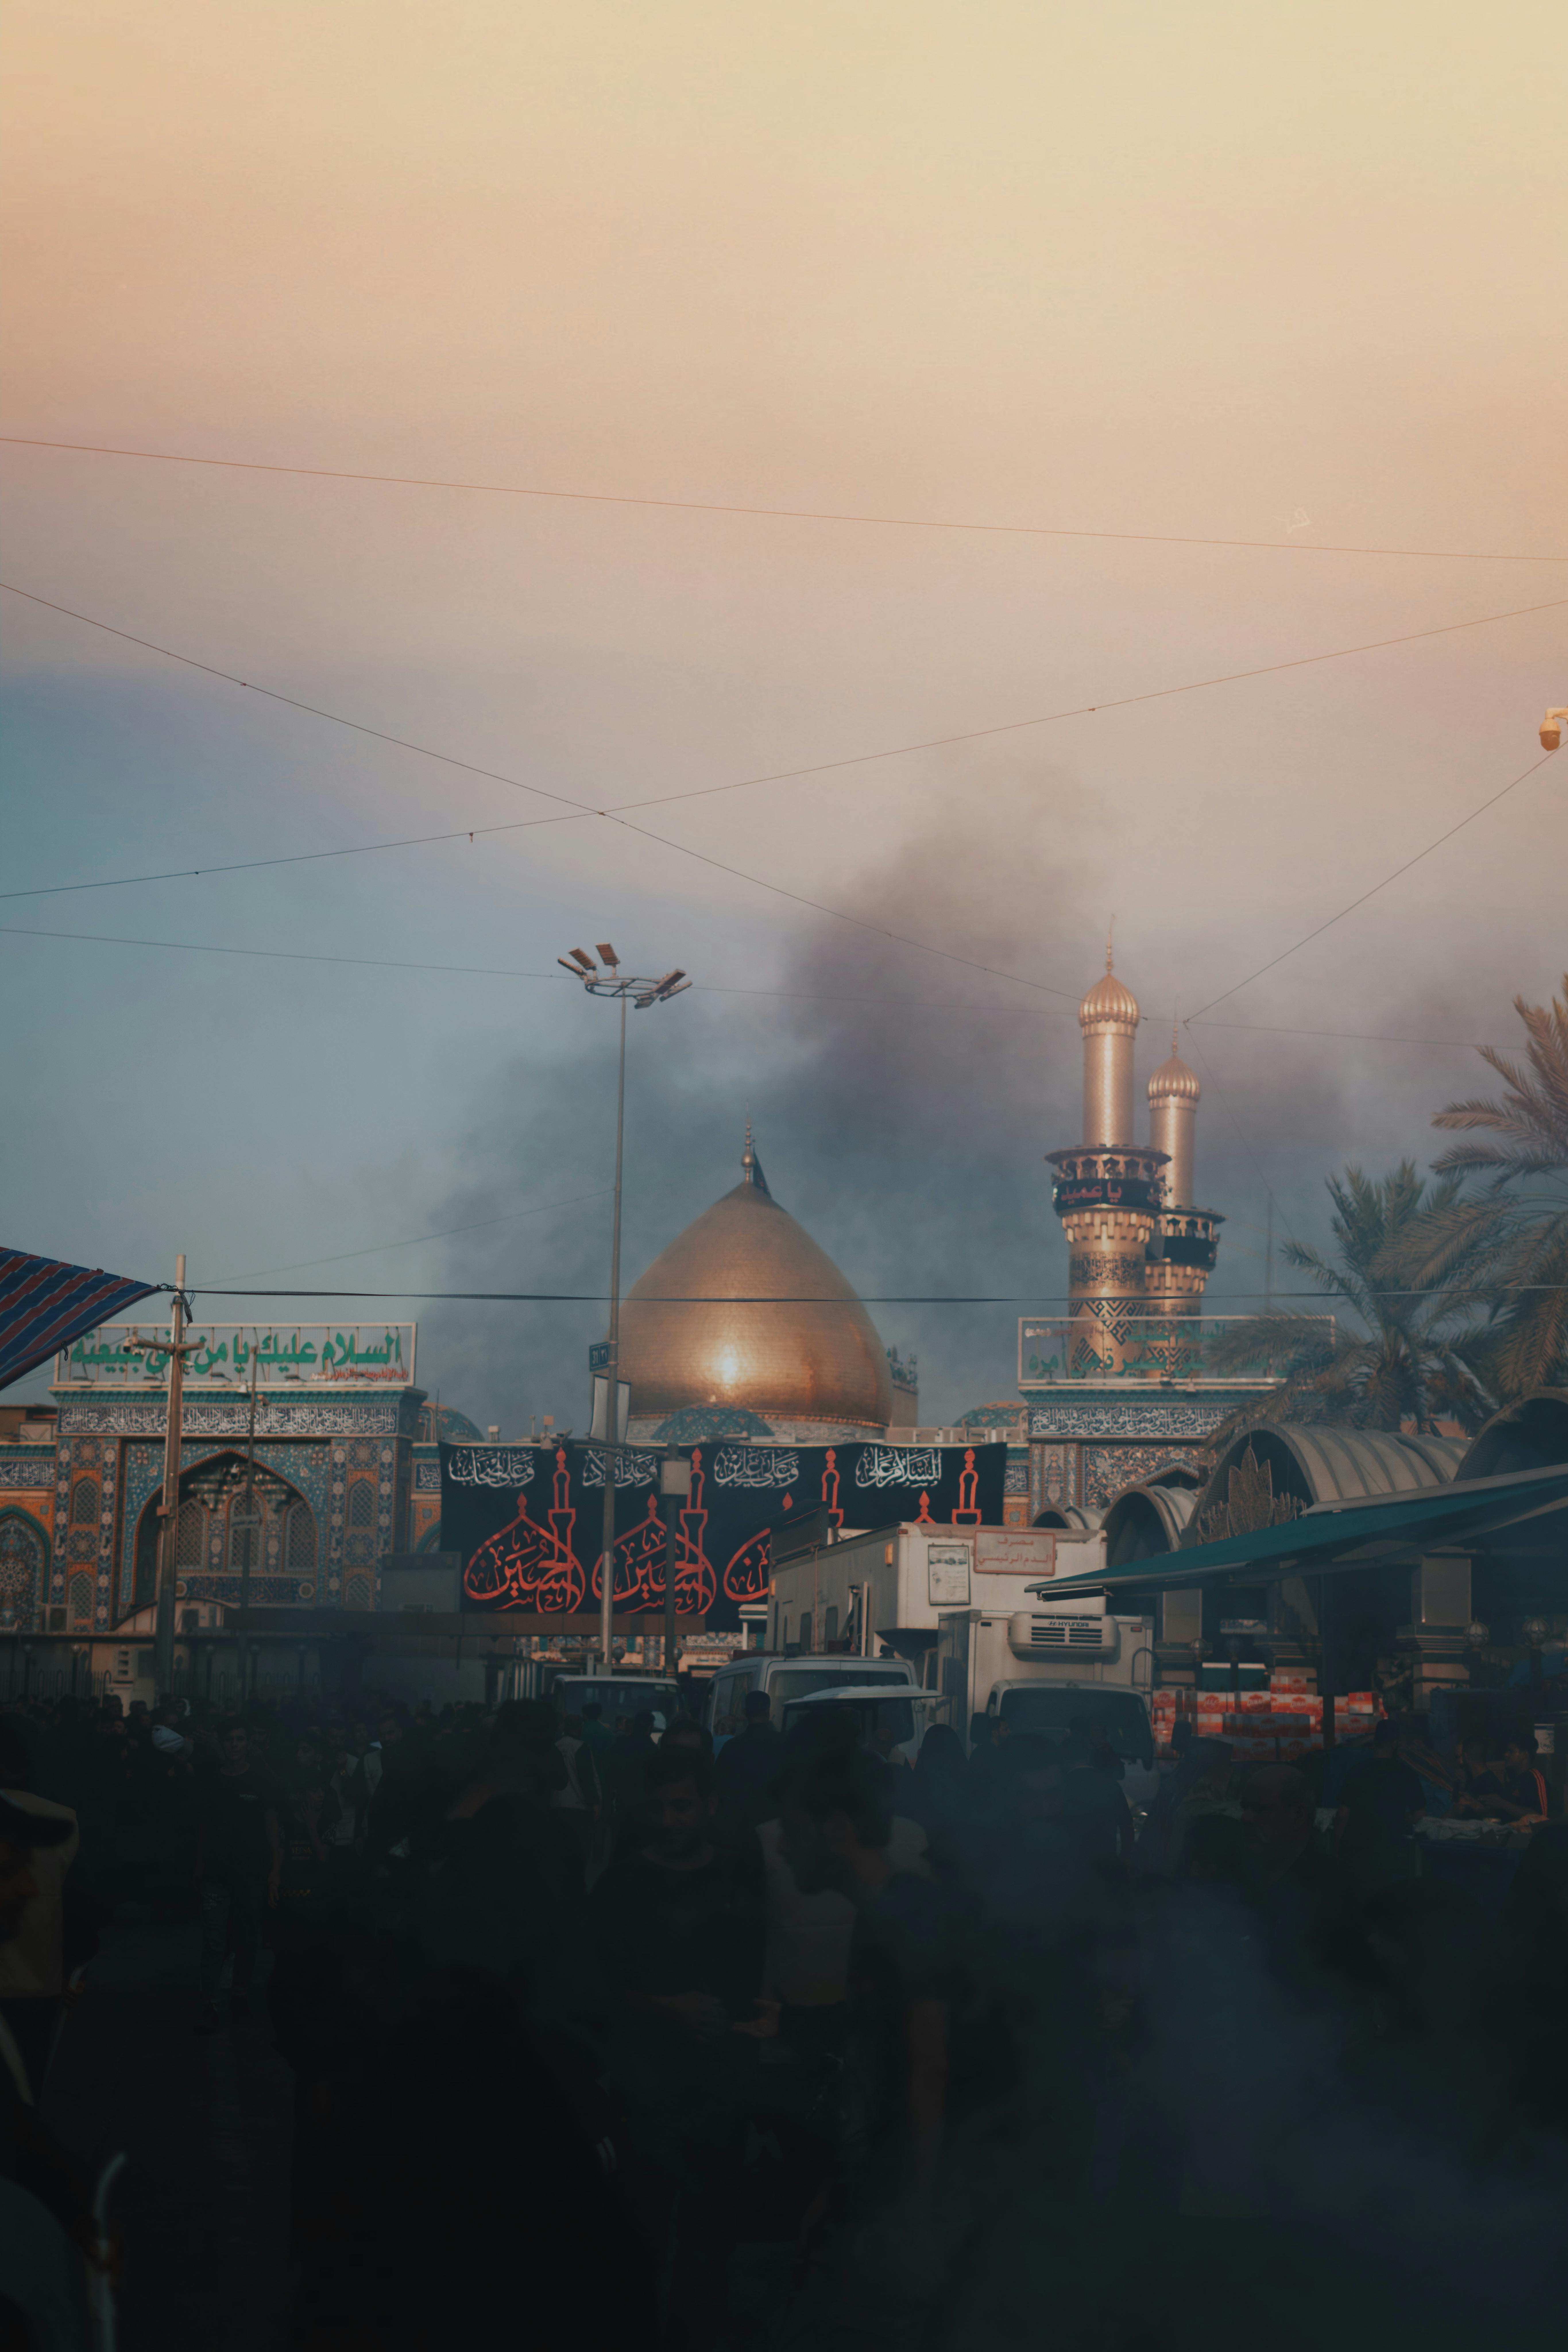 Baghdad Pictures  Download Free Images on Unsplash